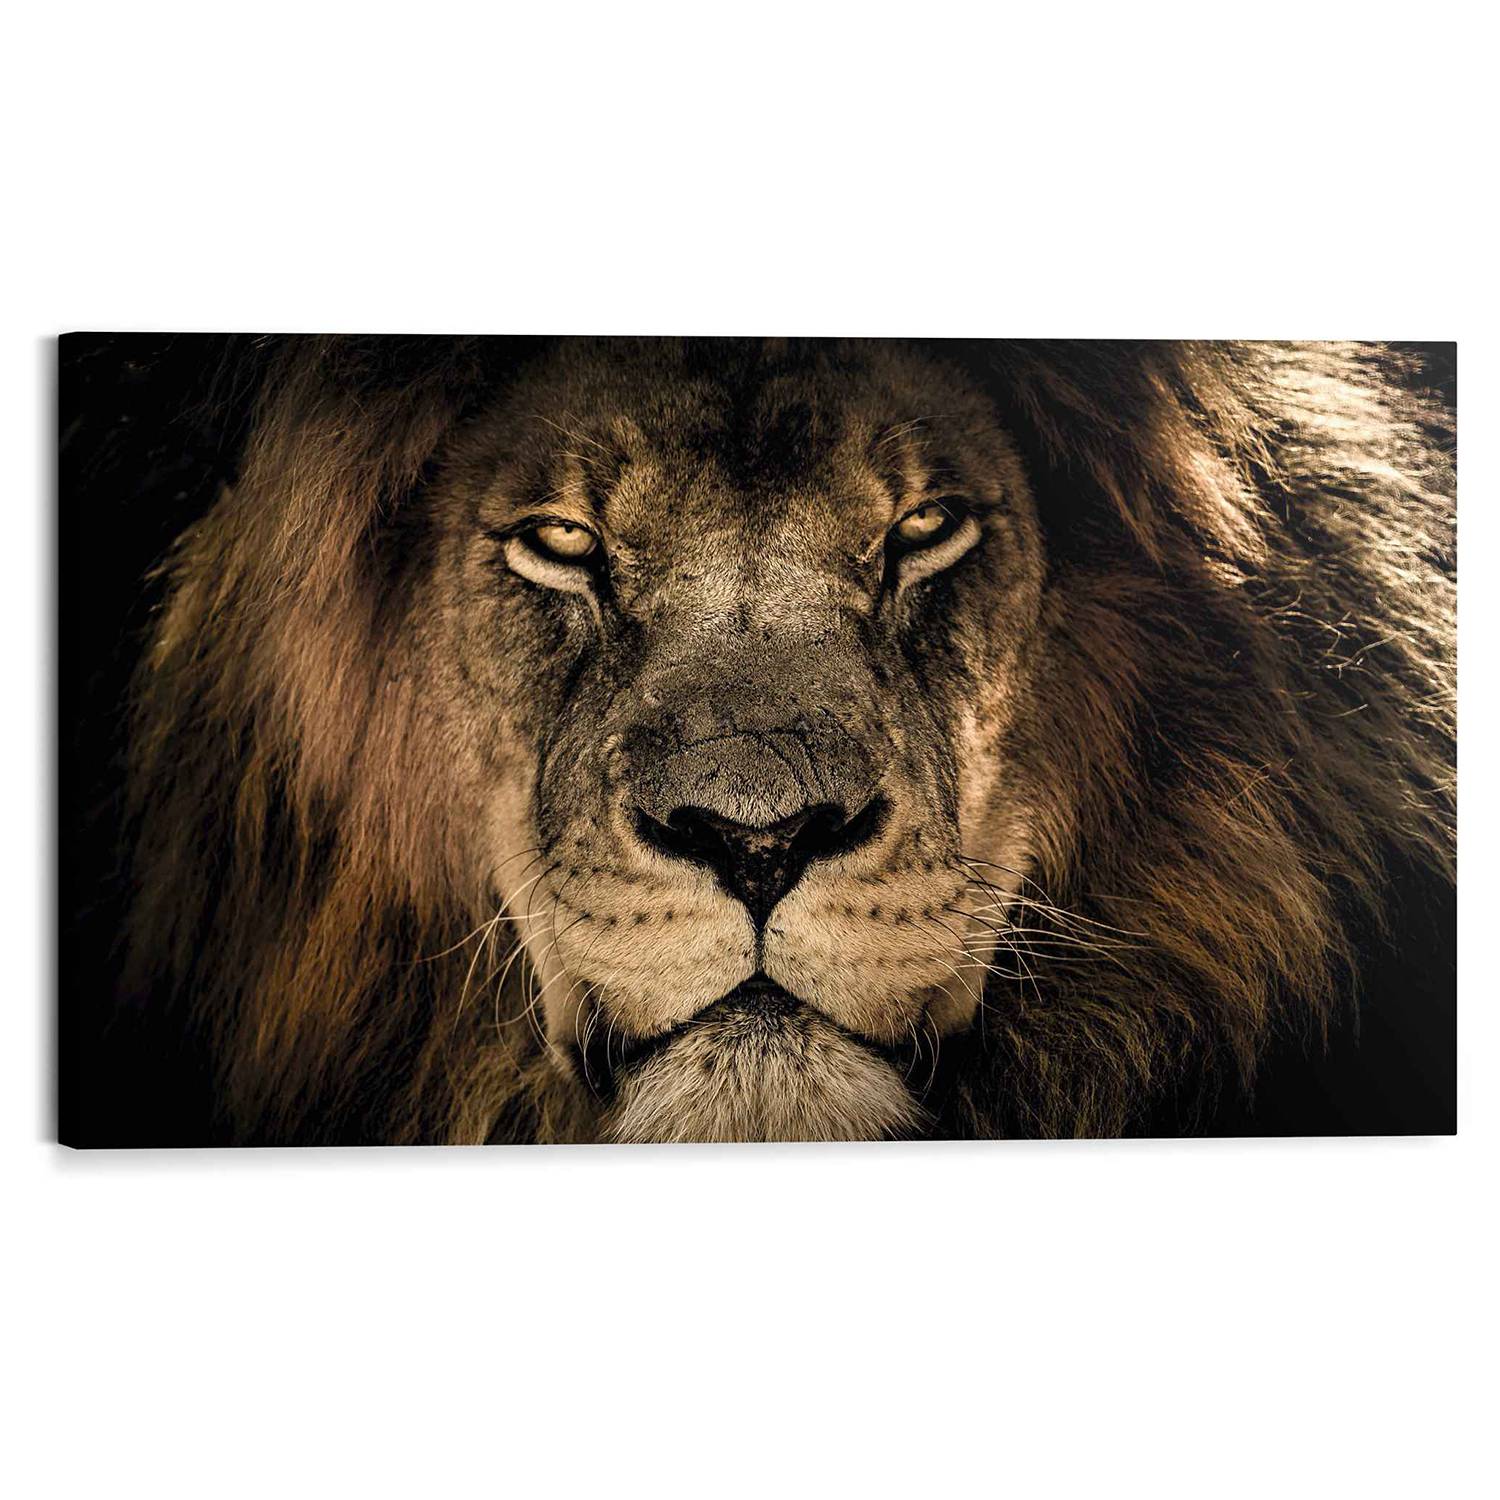 Wandbild Löwe Dschungel kaufen | home24